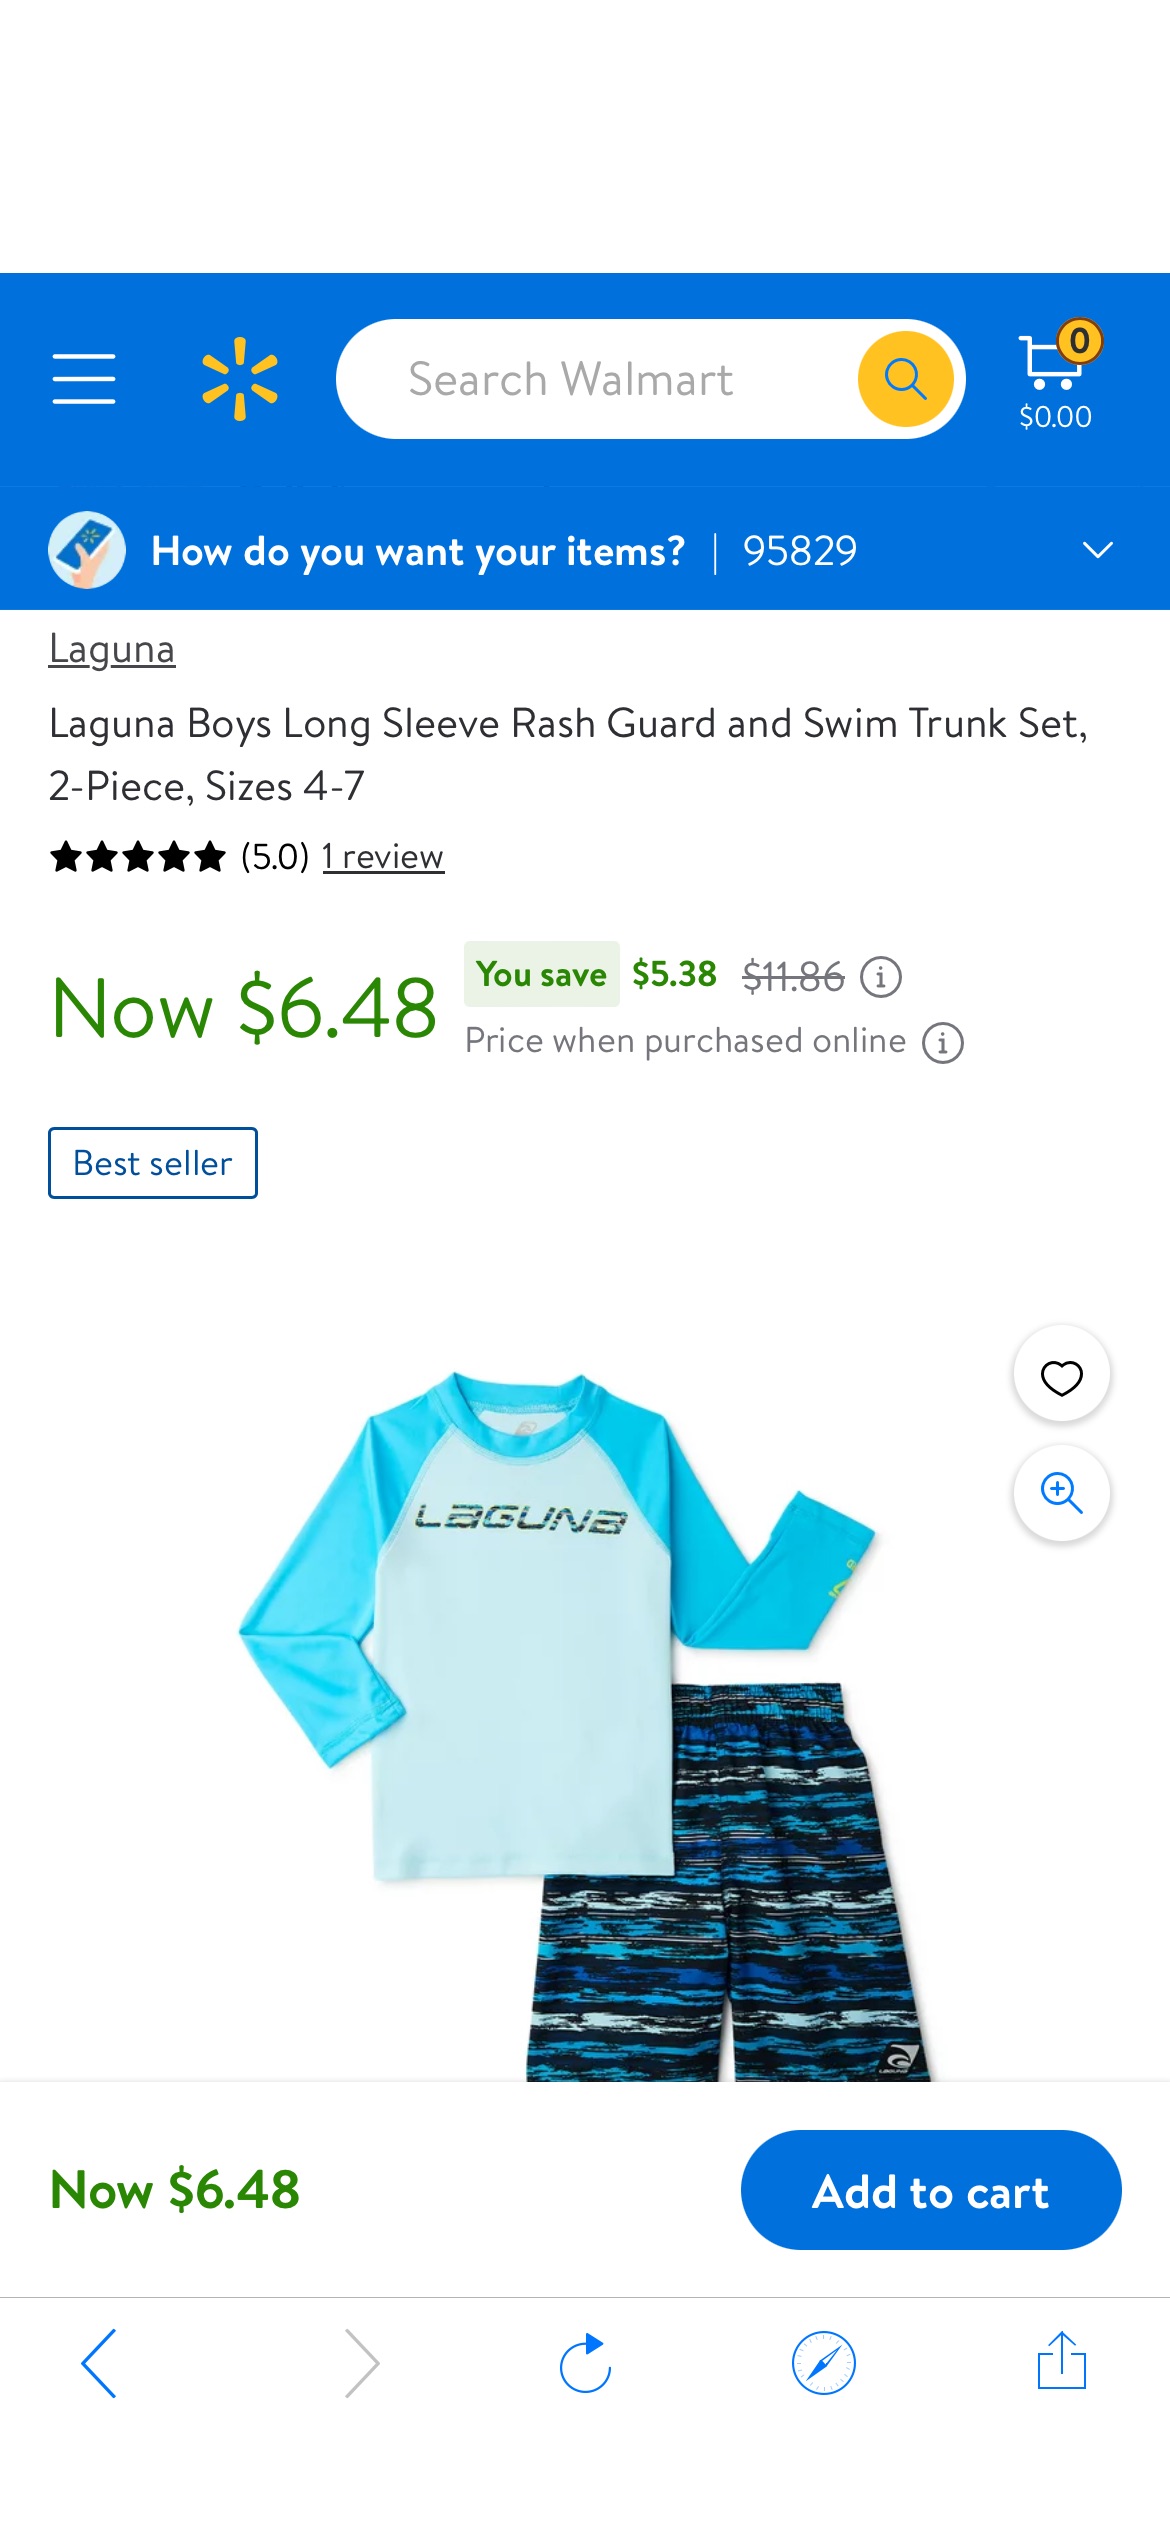 Laguna Boys Long Sleeve Rash Guard and Swim Trunk Set, 2-Piece, Sizes 4-7 - Walmart.com男童泳衣